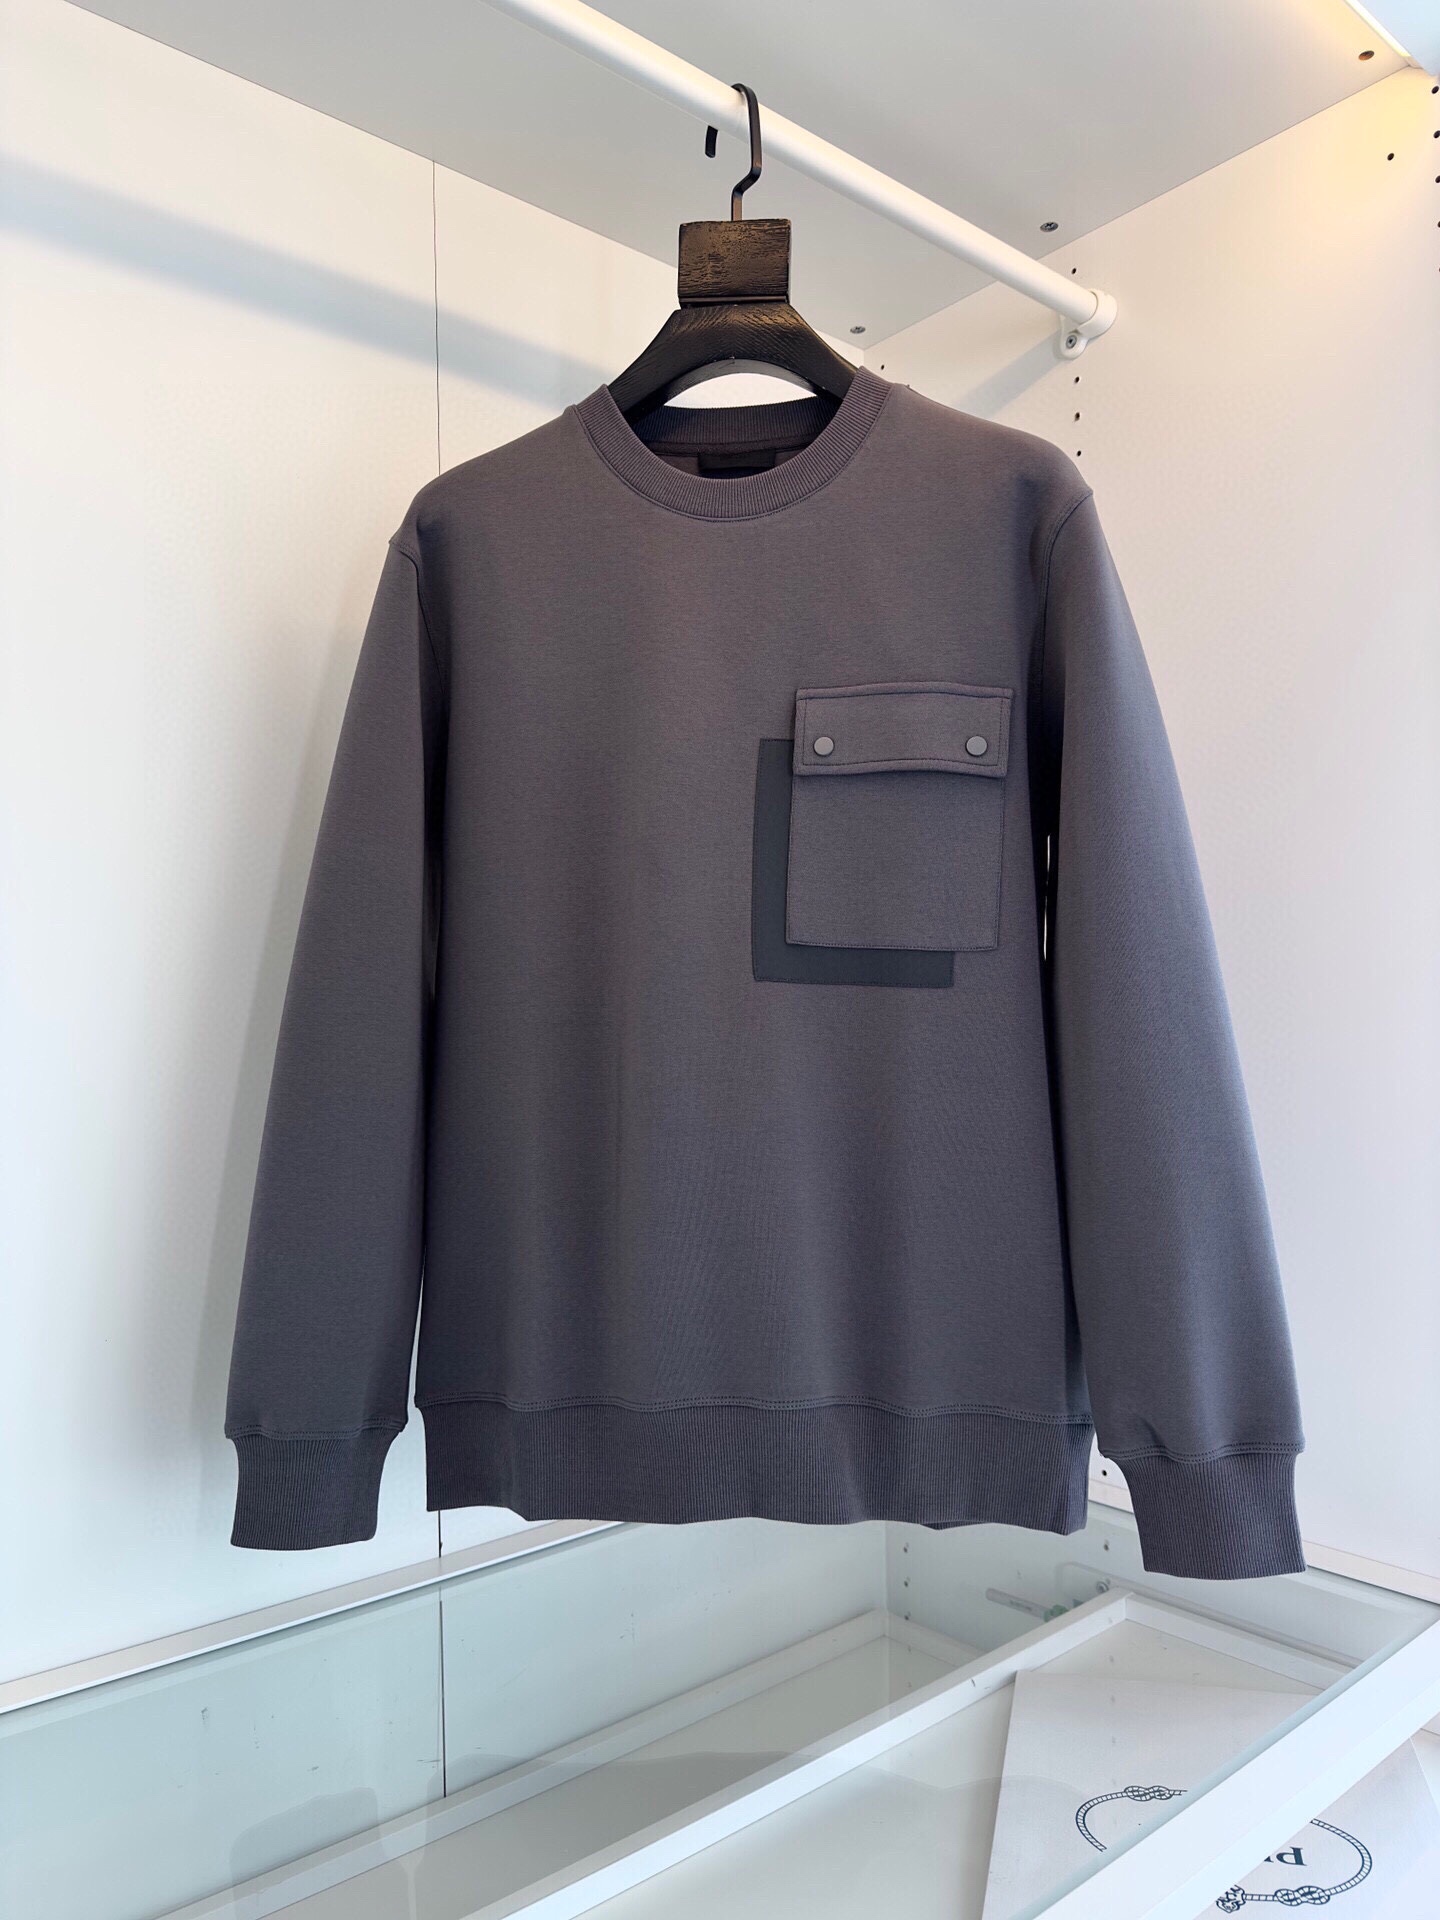 Prada Clothing Coats & Jackets Sweatshirts Black Grey Light Gray Splicing Nylon Fall/Winter Collection Fashion Casual